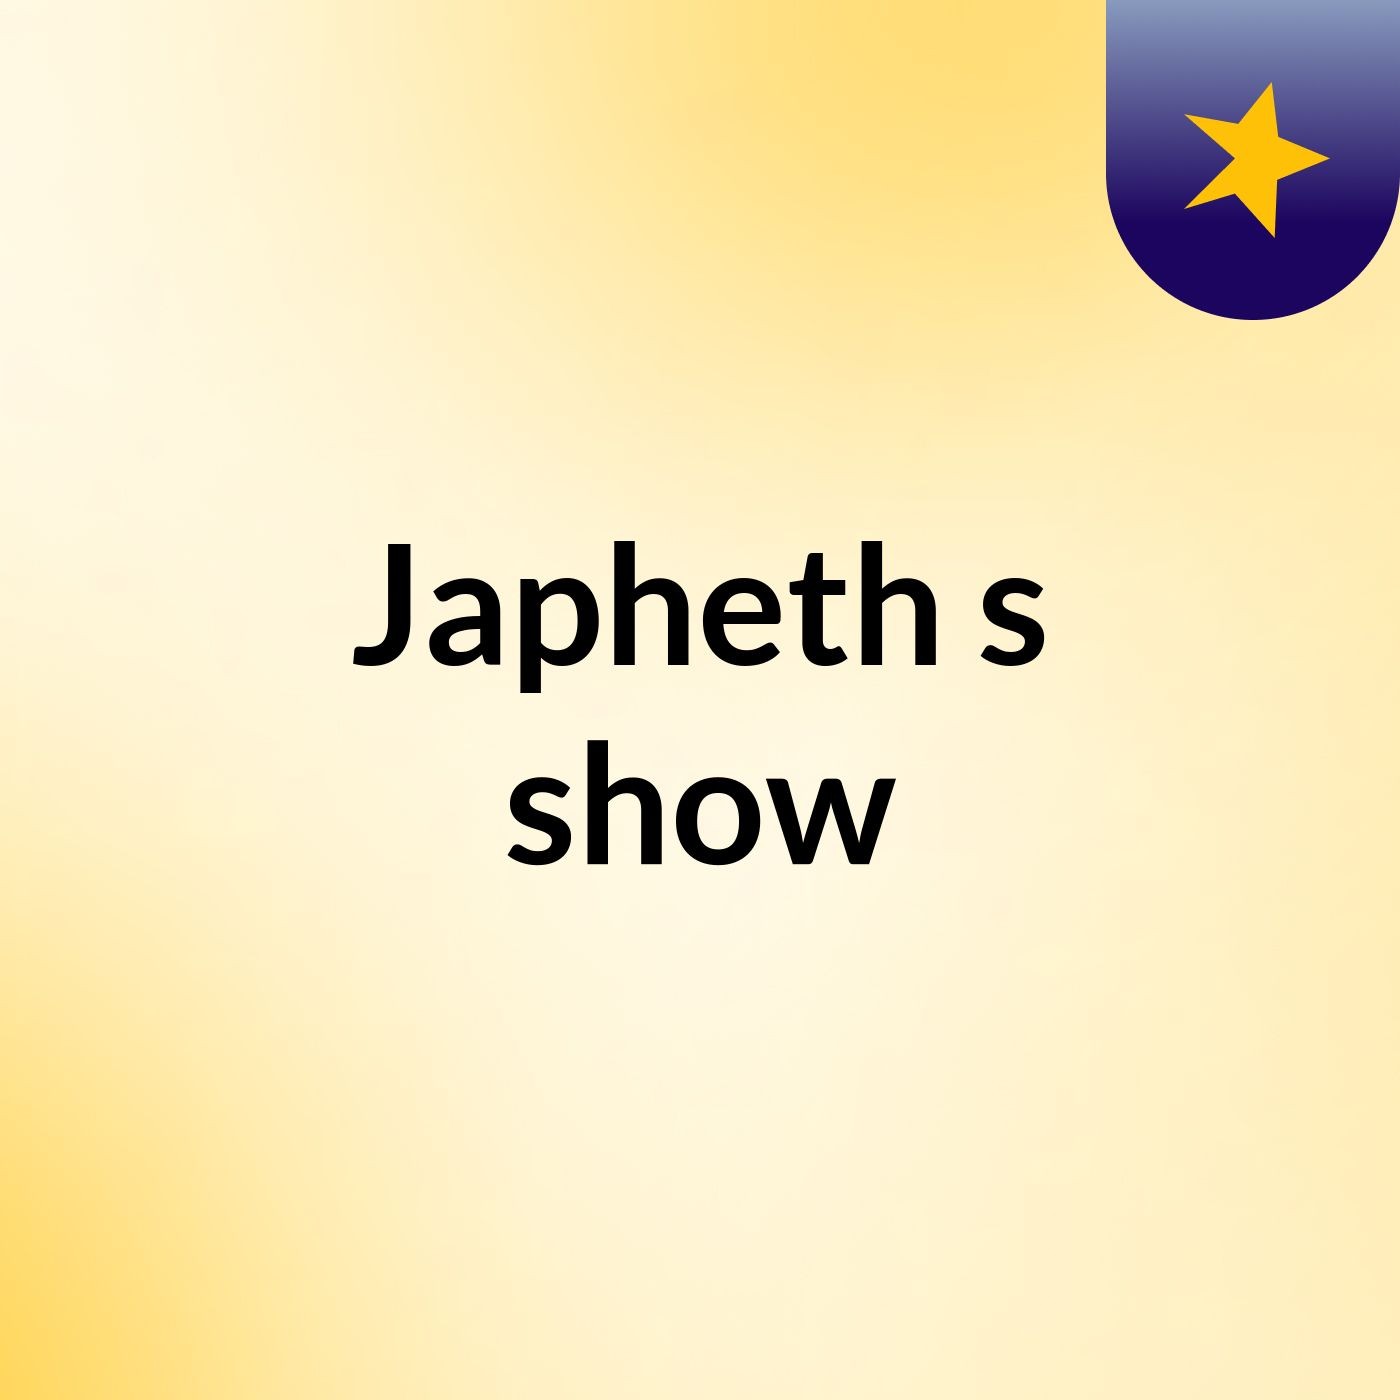 Japheth's show